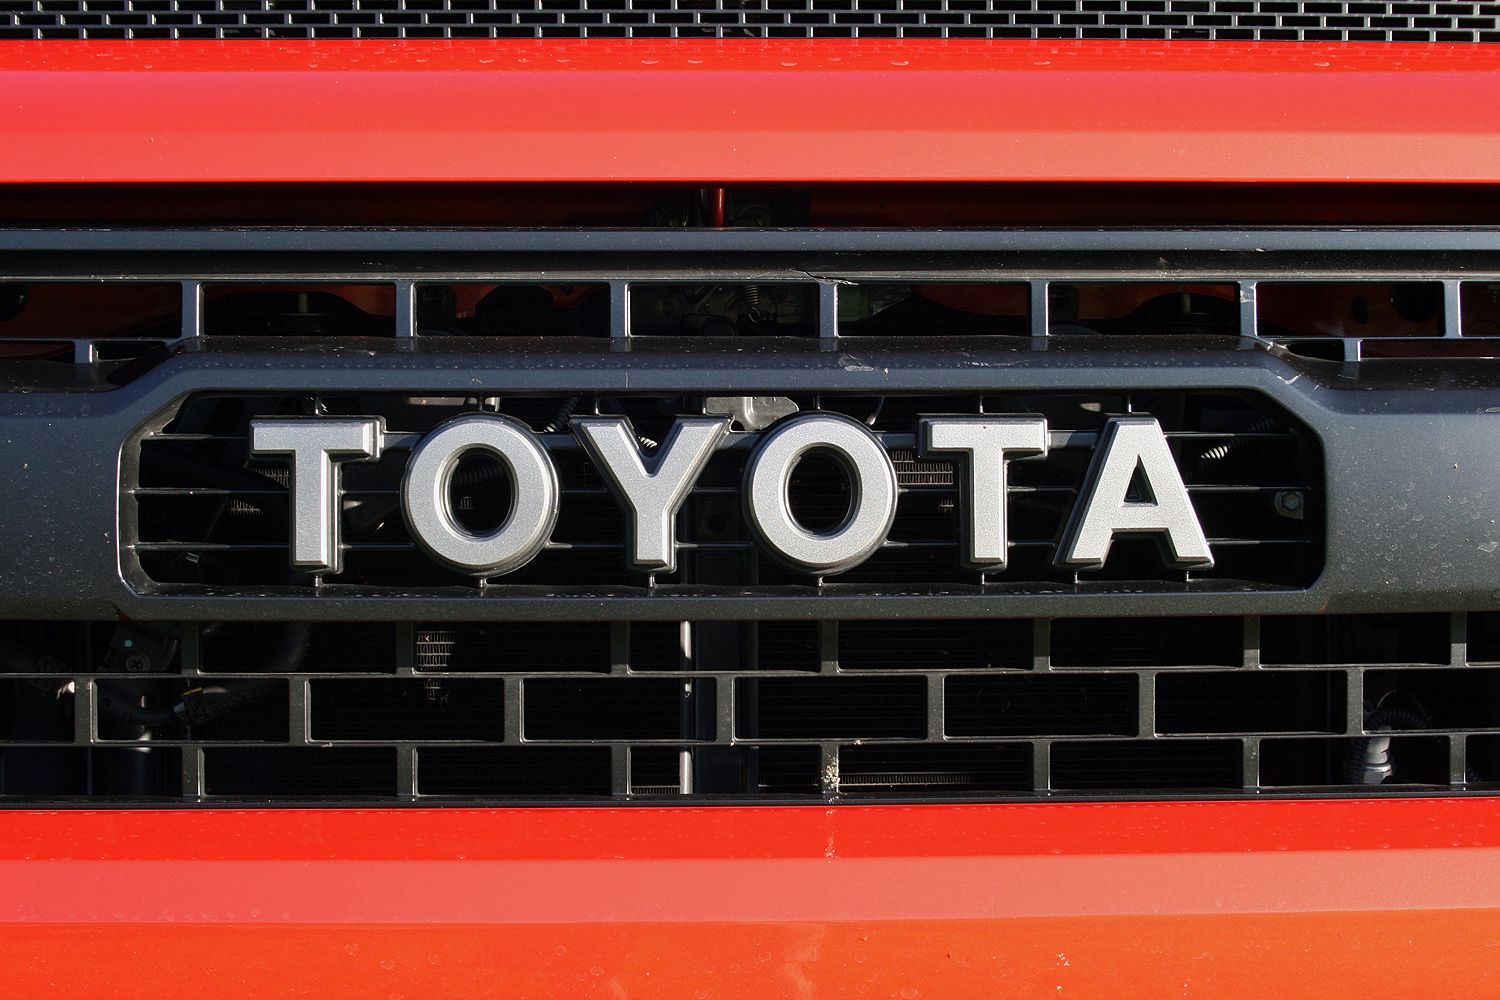 2015 Toyota Tundra TRD Pro - Driven